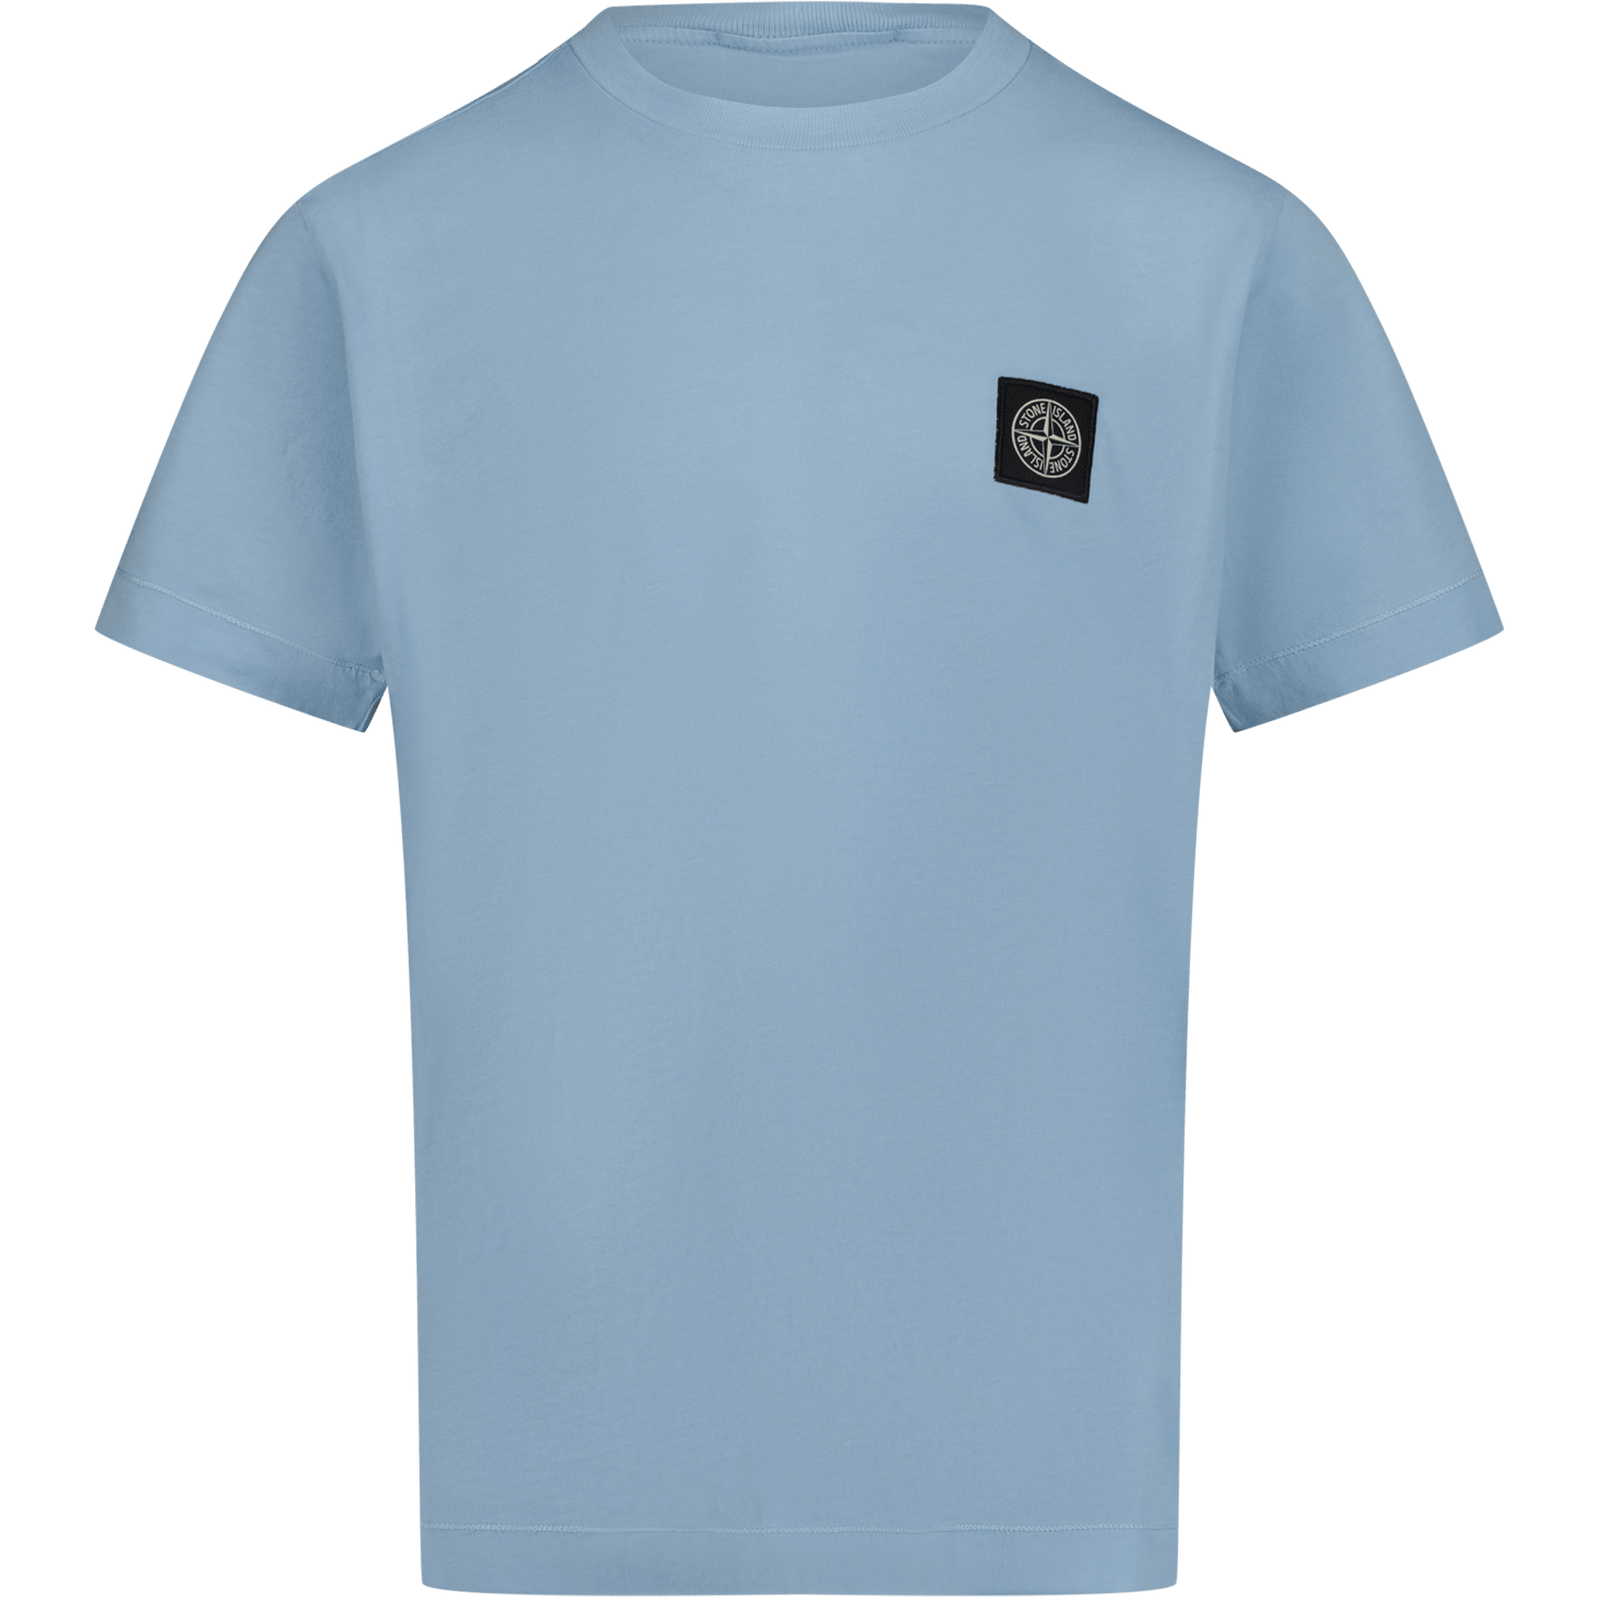 Stone Island Kinder Jongens T-Shirt Licht Blauw 2Y